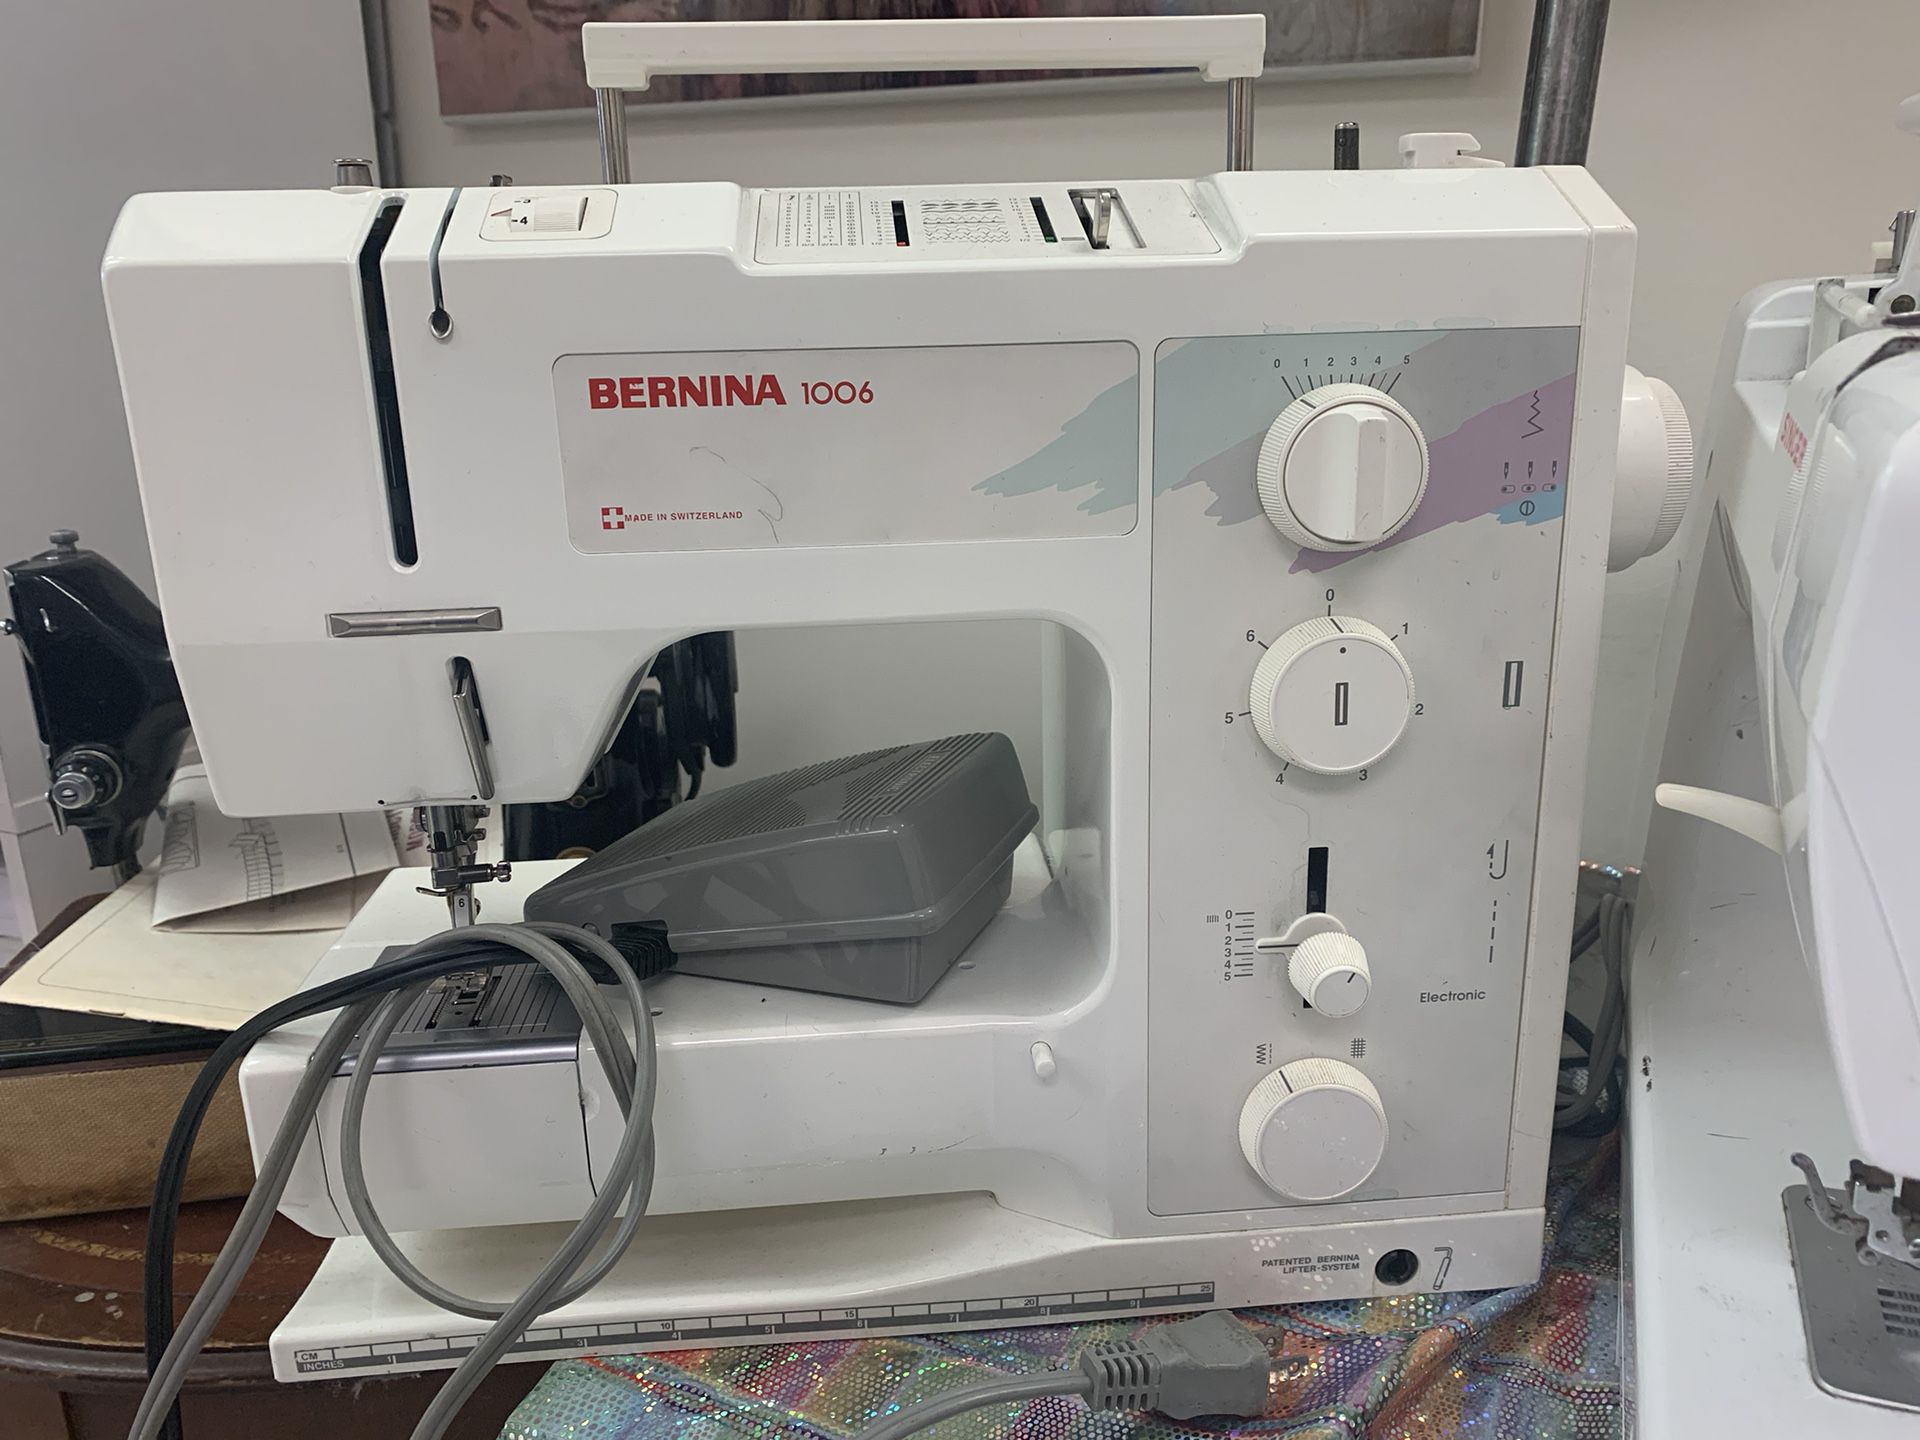 Bernina 1006 sewing machine